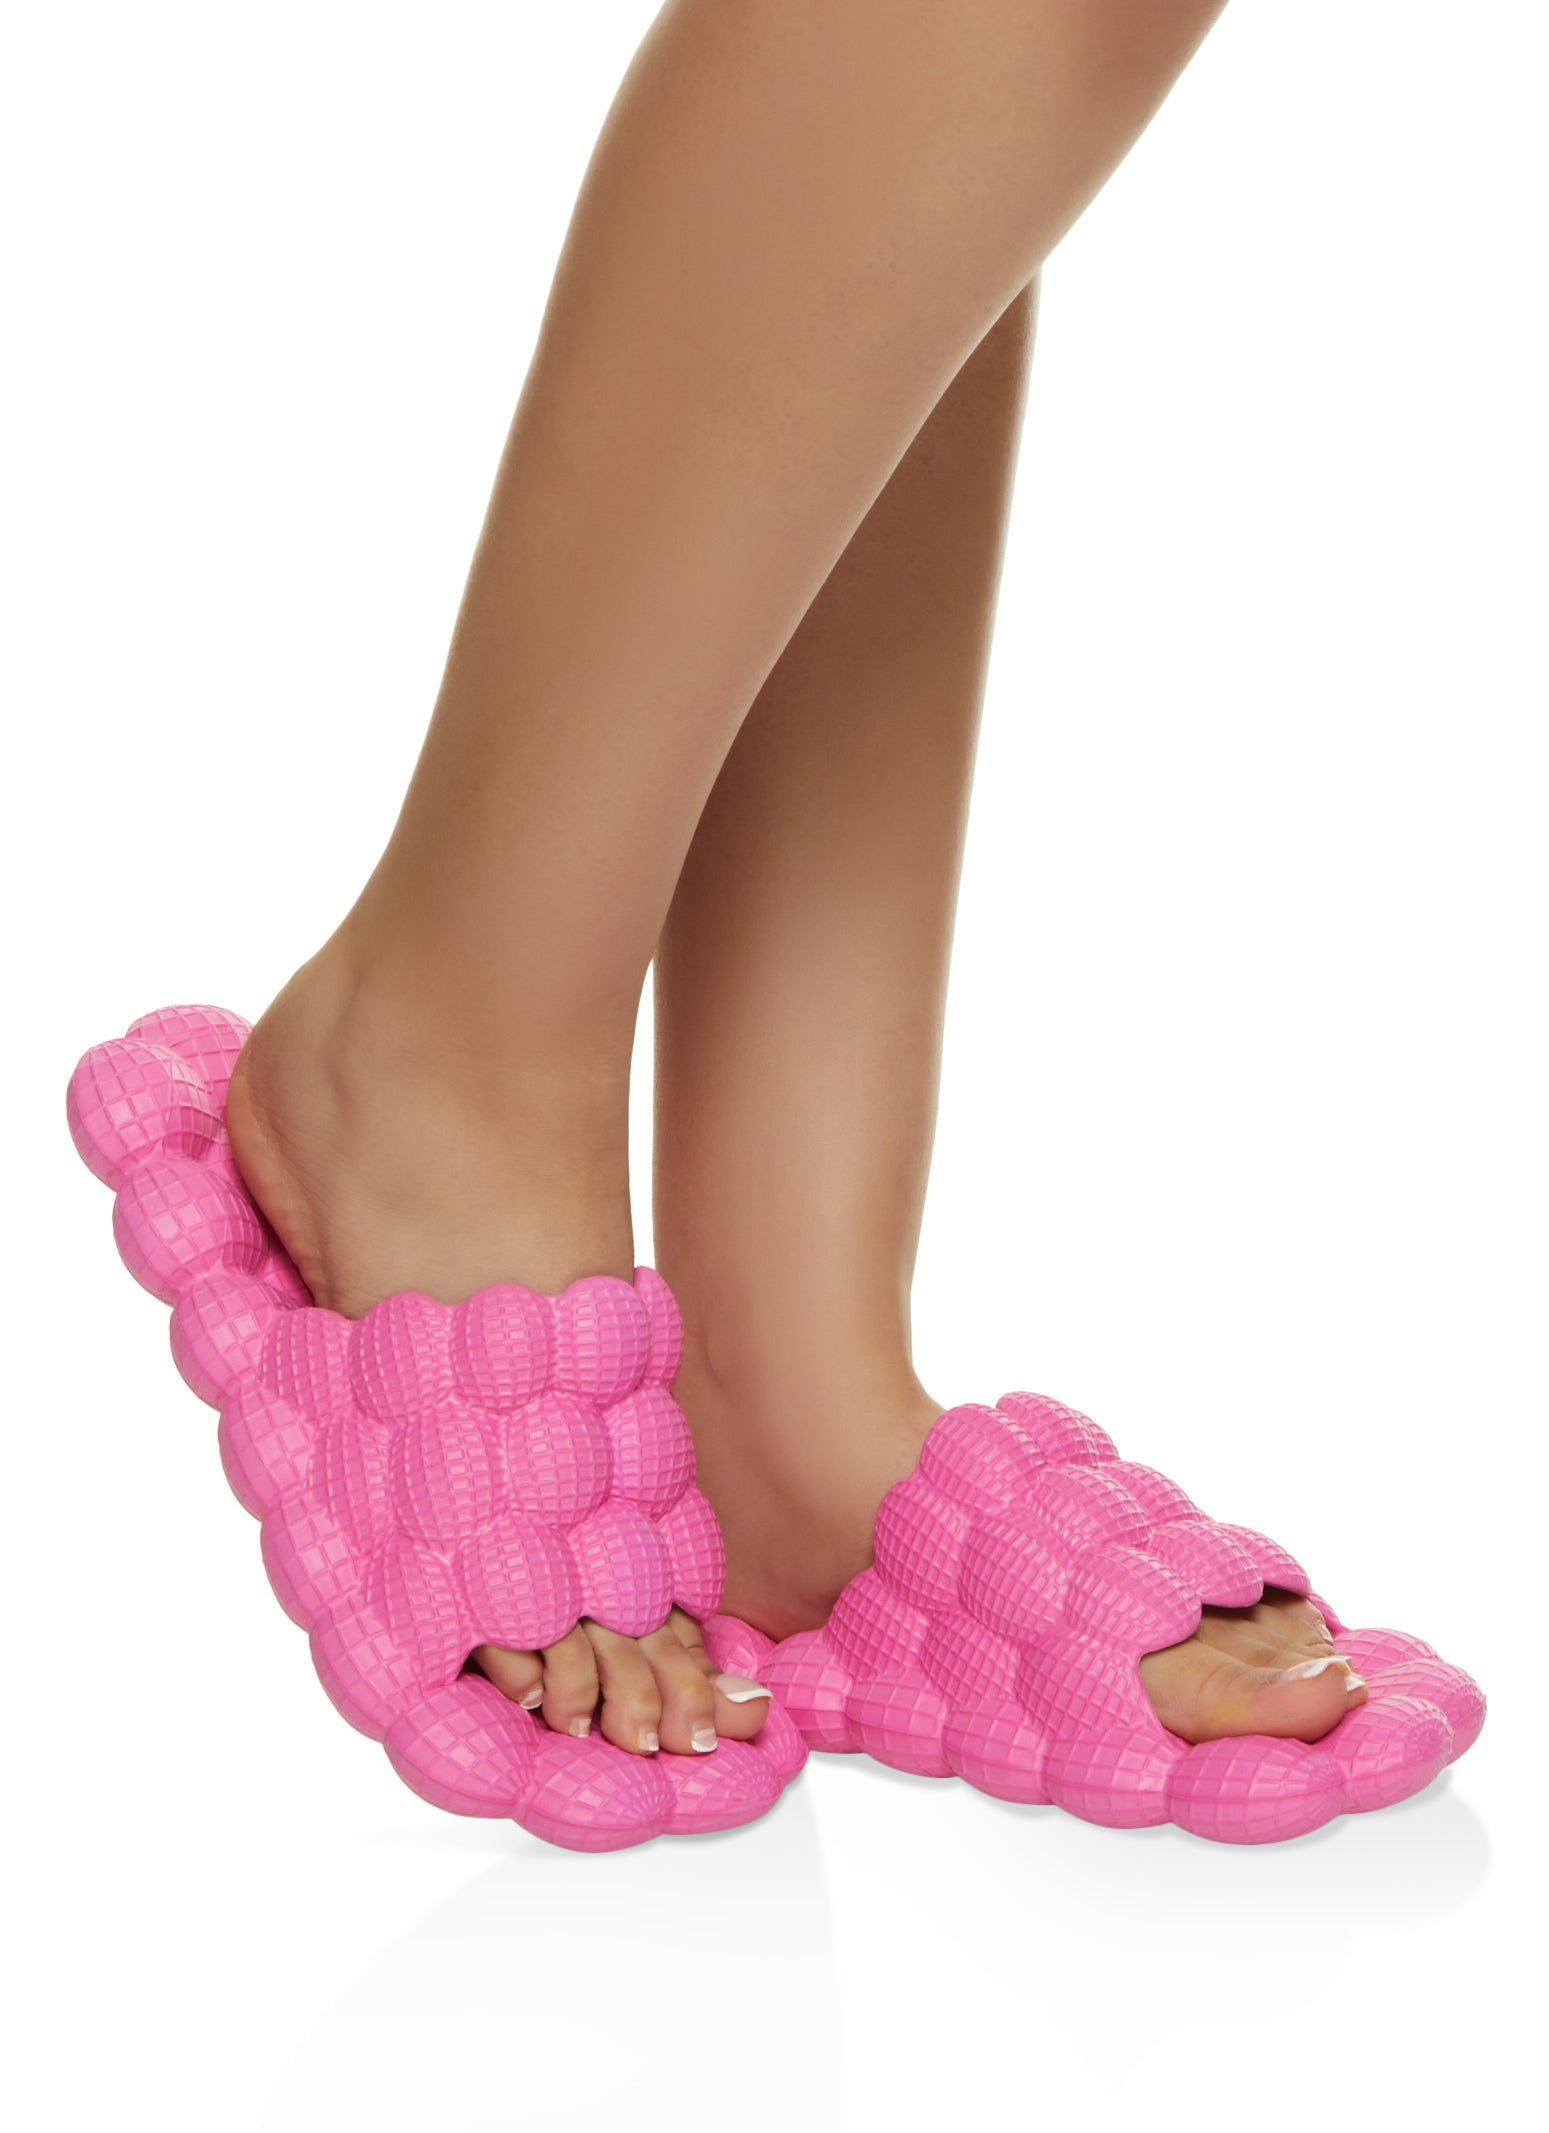 SENSI Woman slippers 4400 fuchsia